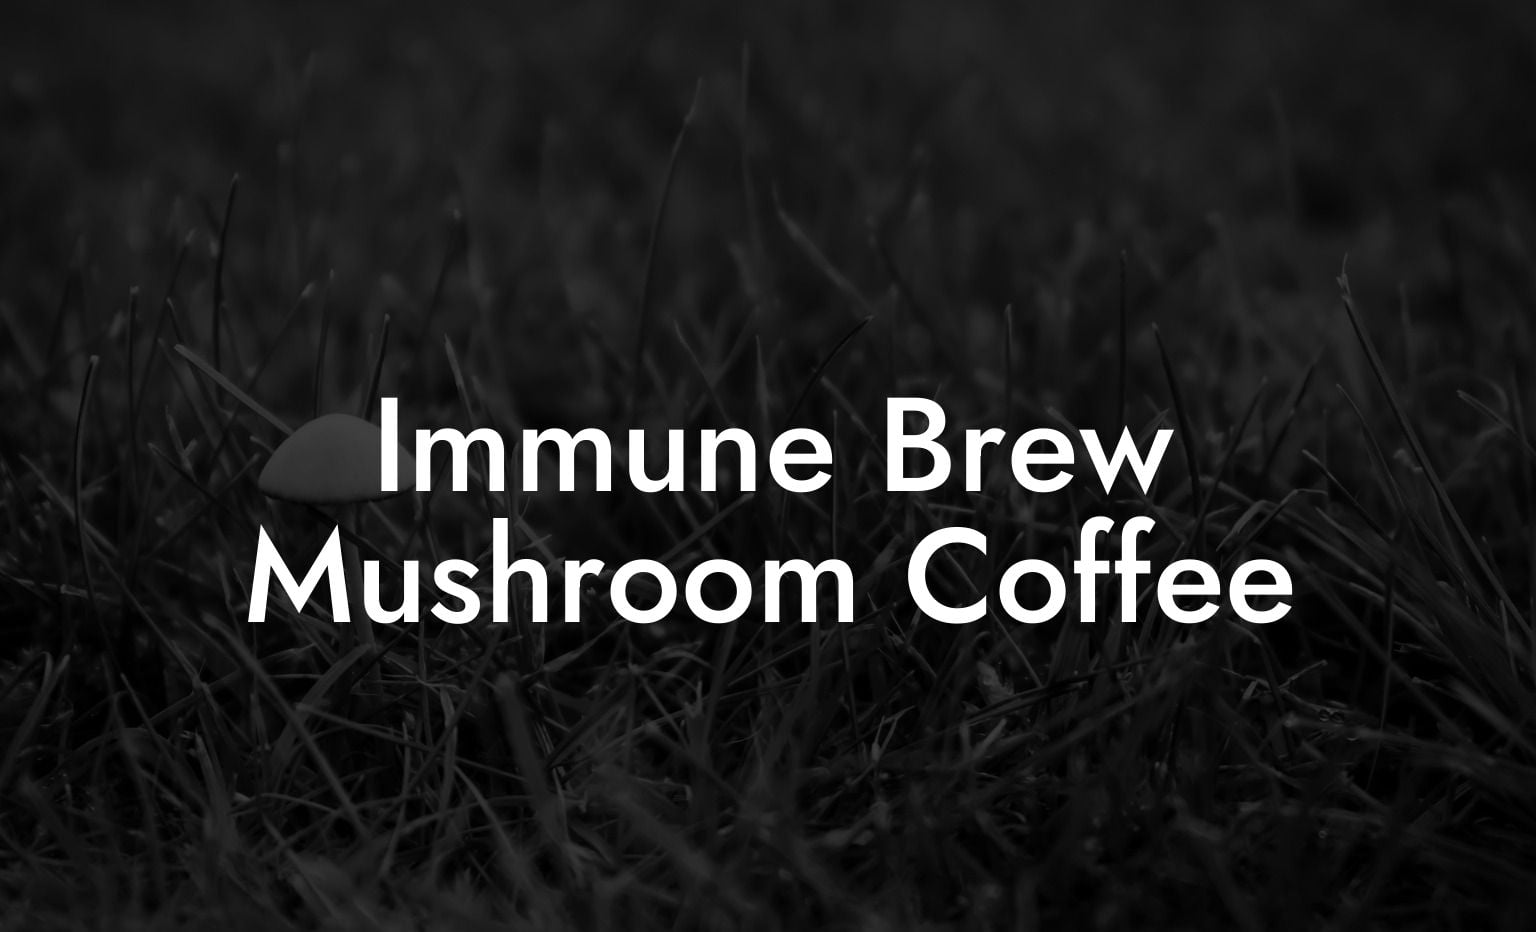 Immune Brew Mushroom Coffee